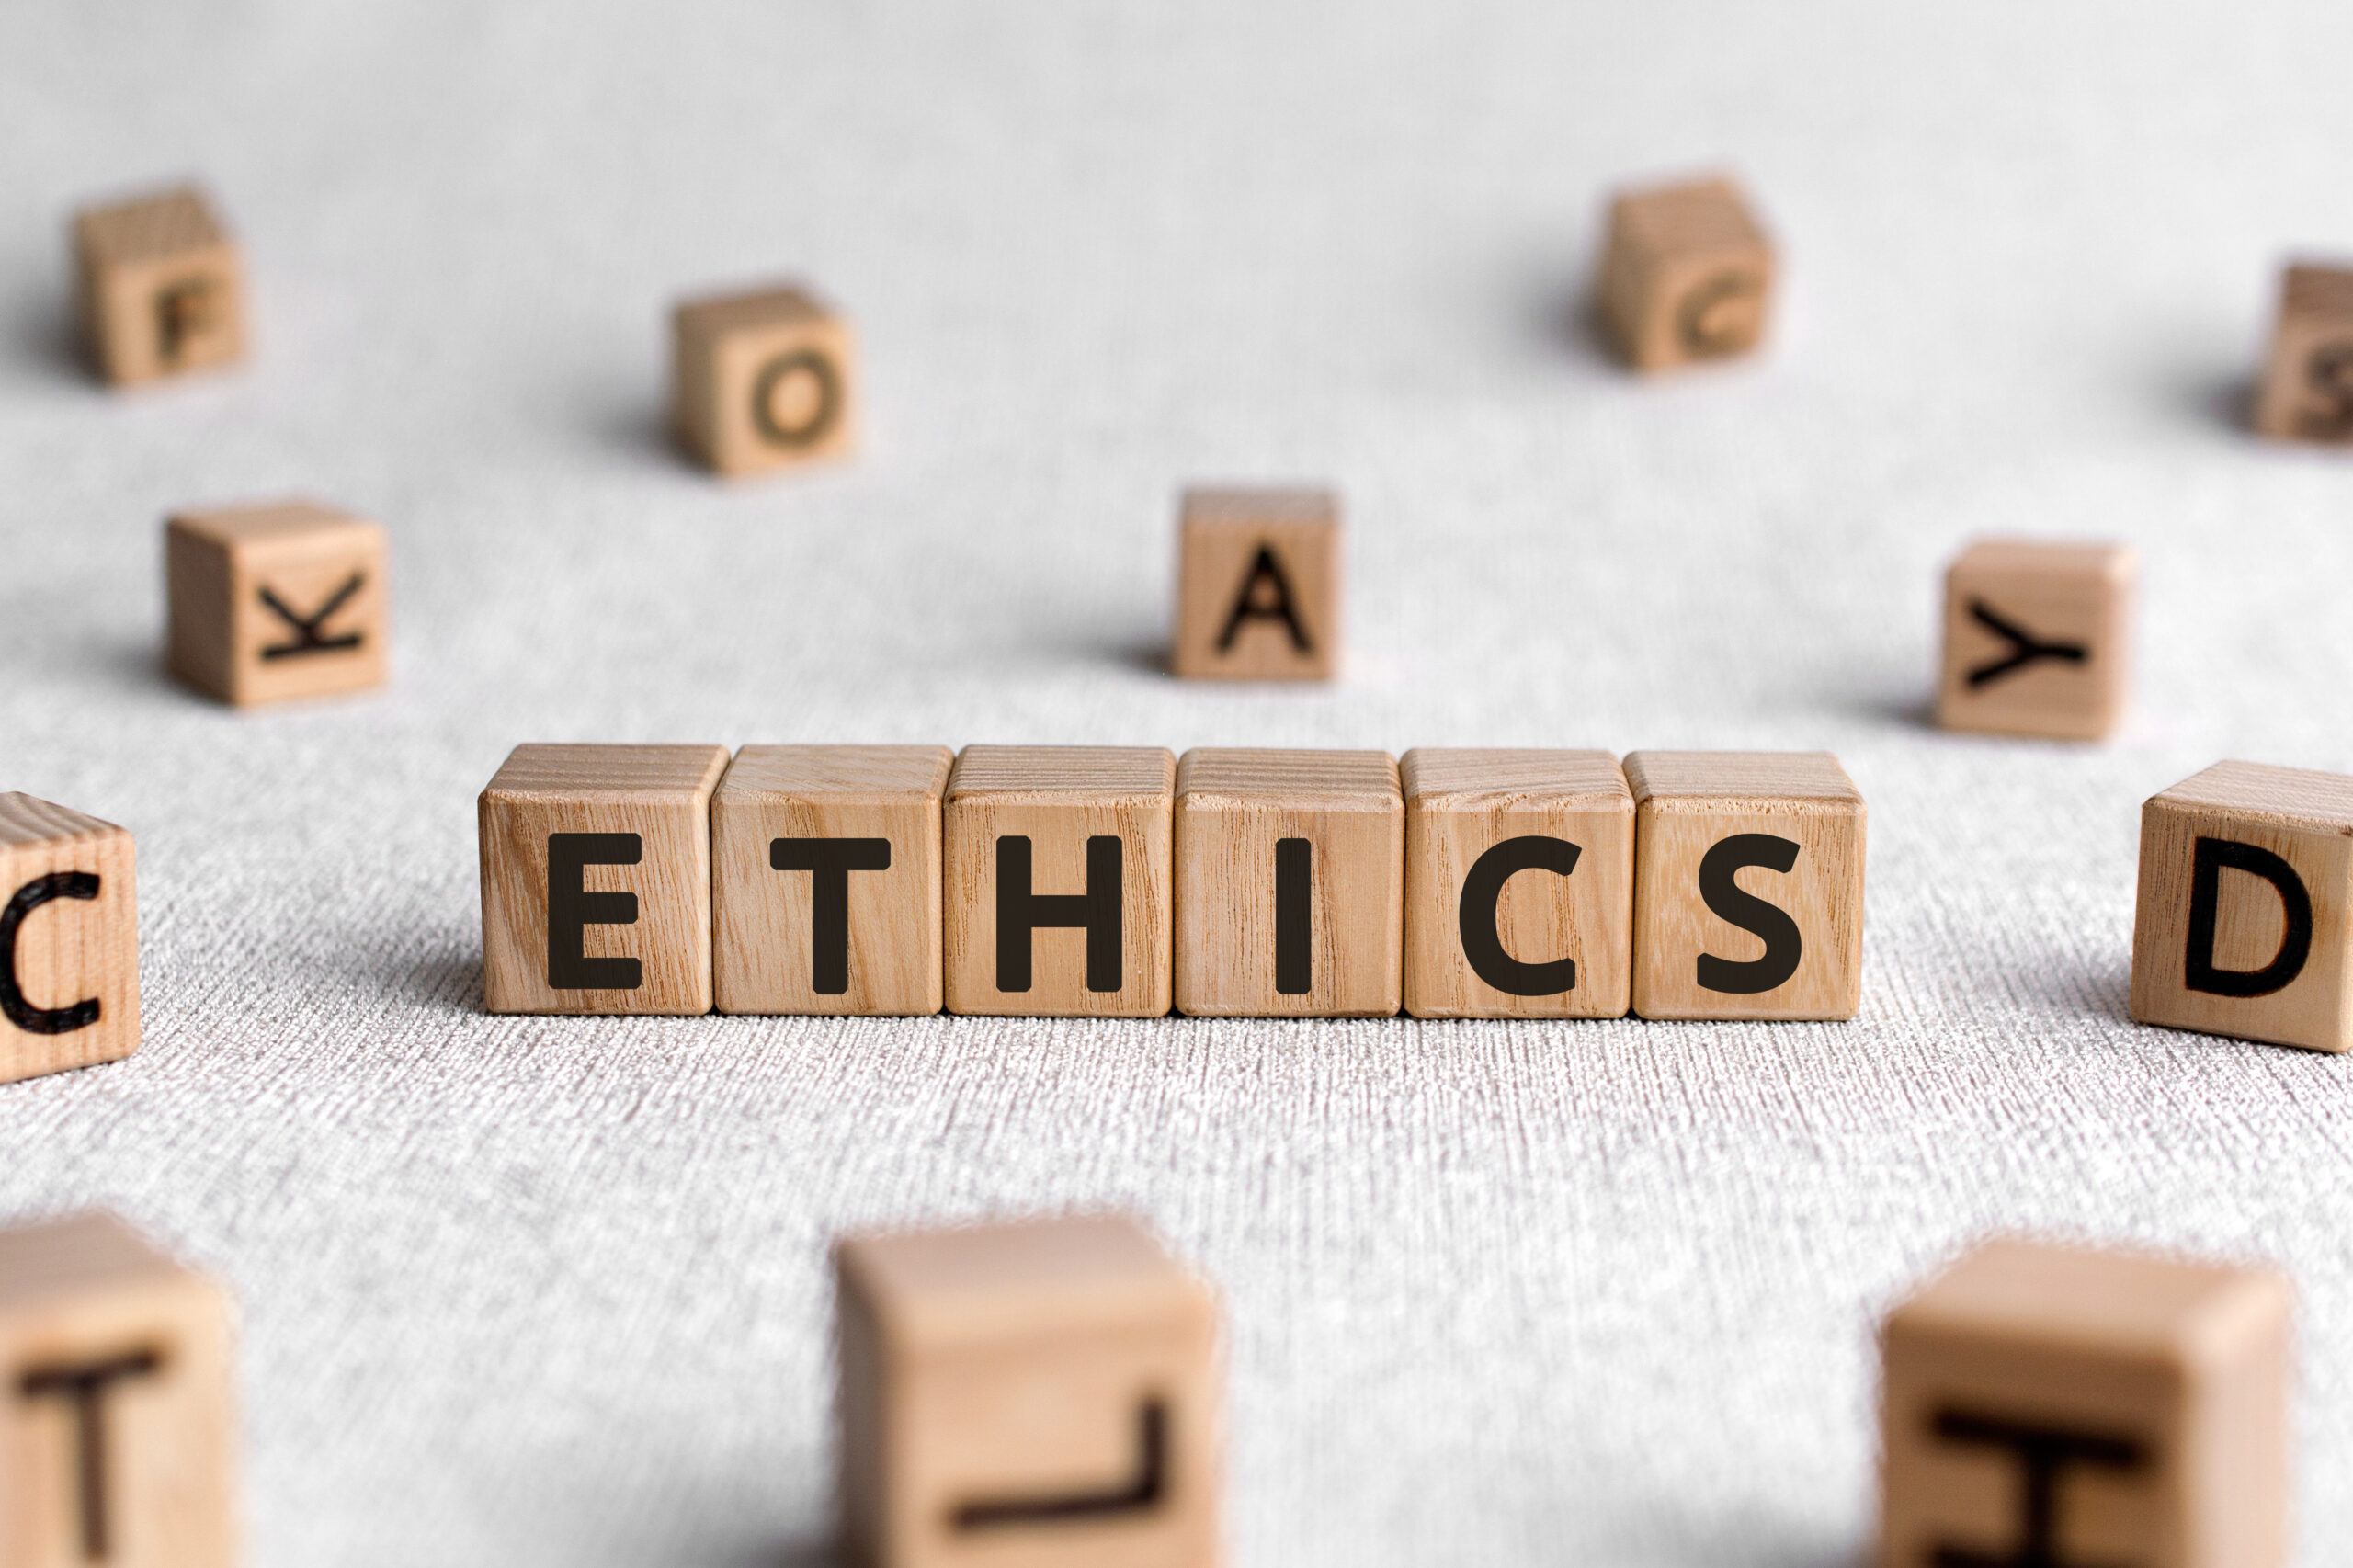 AET France a Bureau Veritas Company Code of Ethics